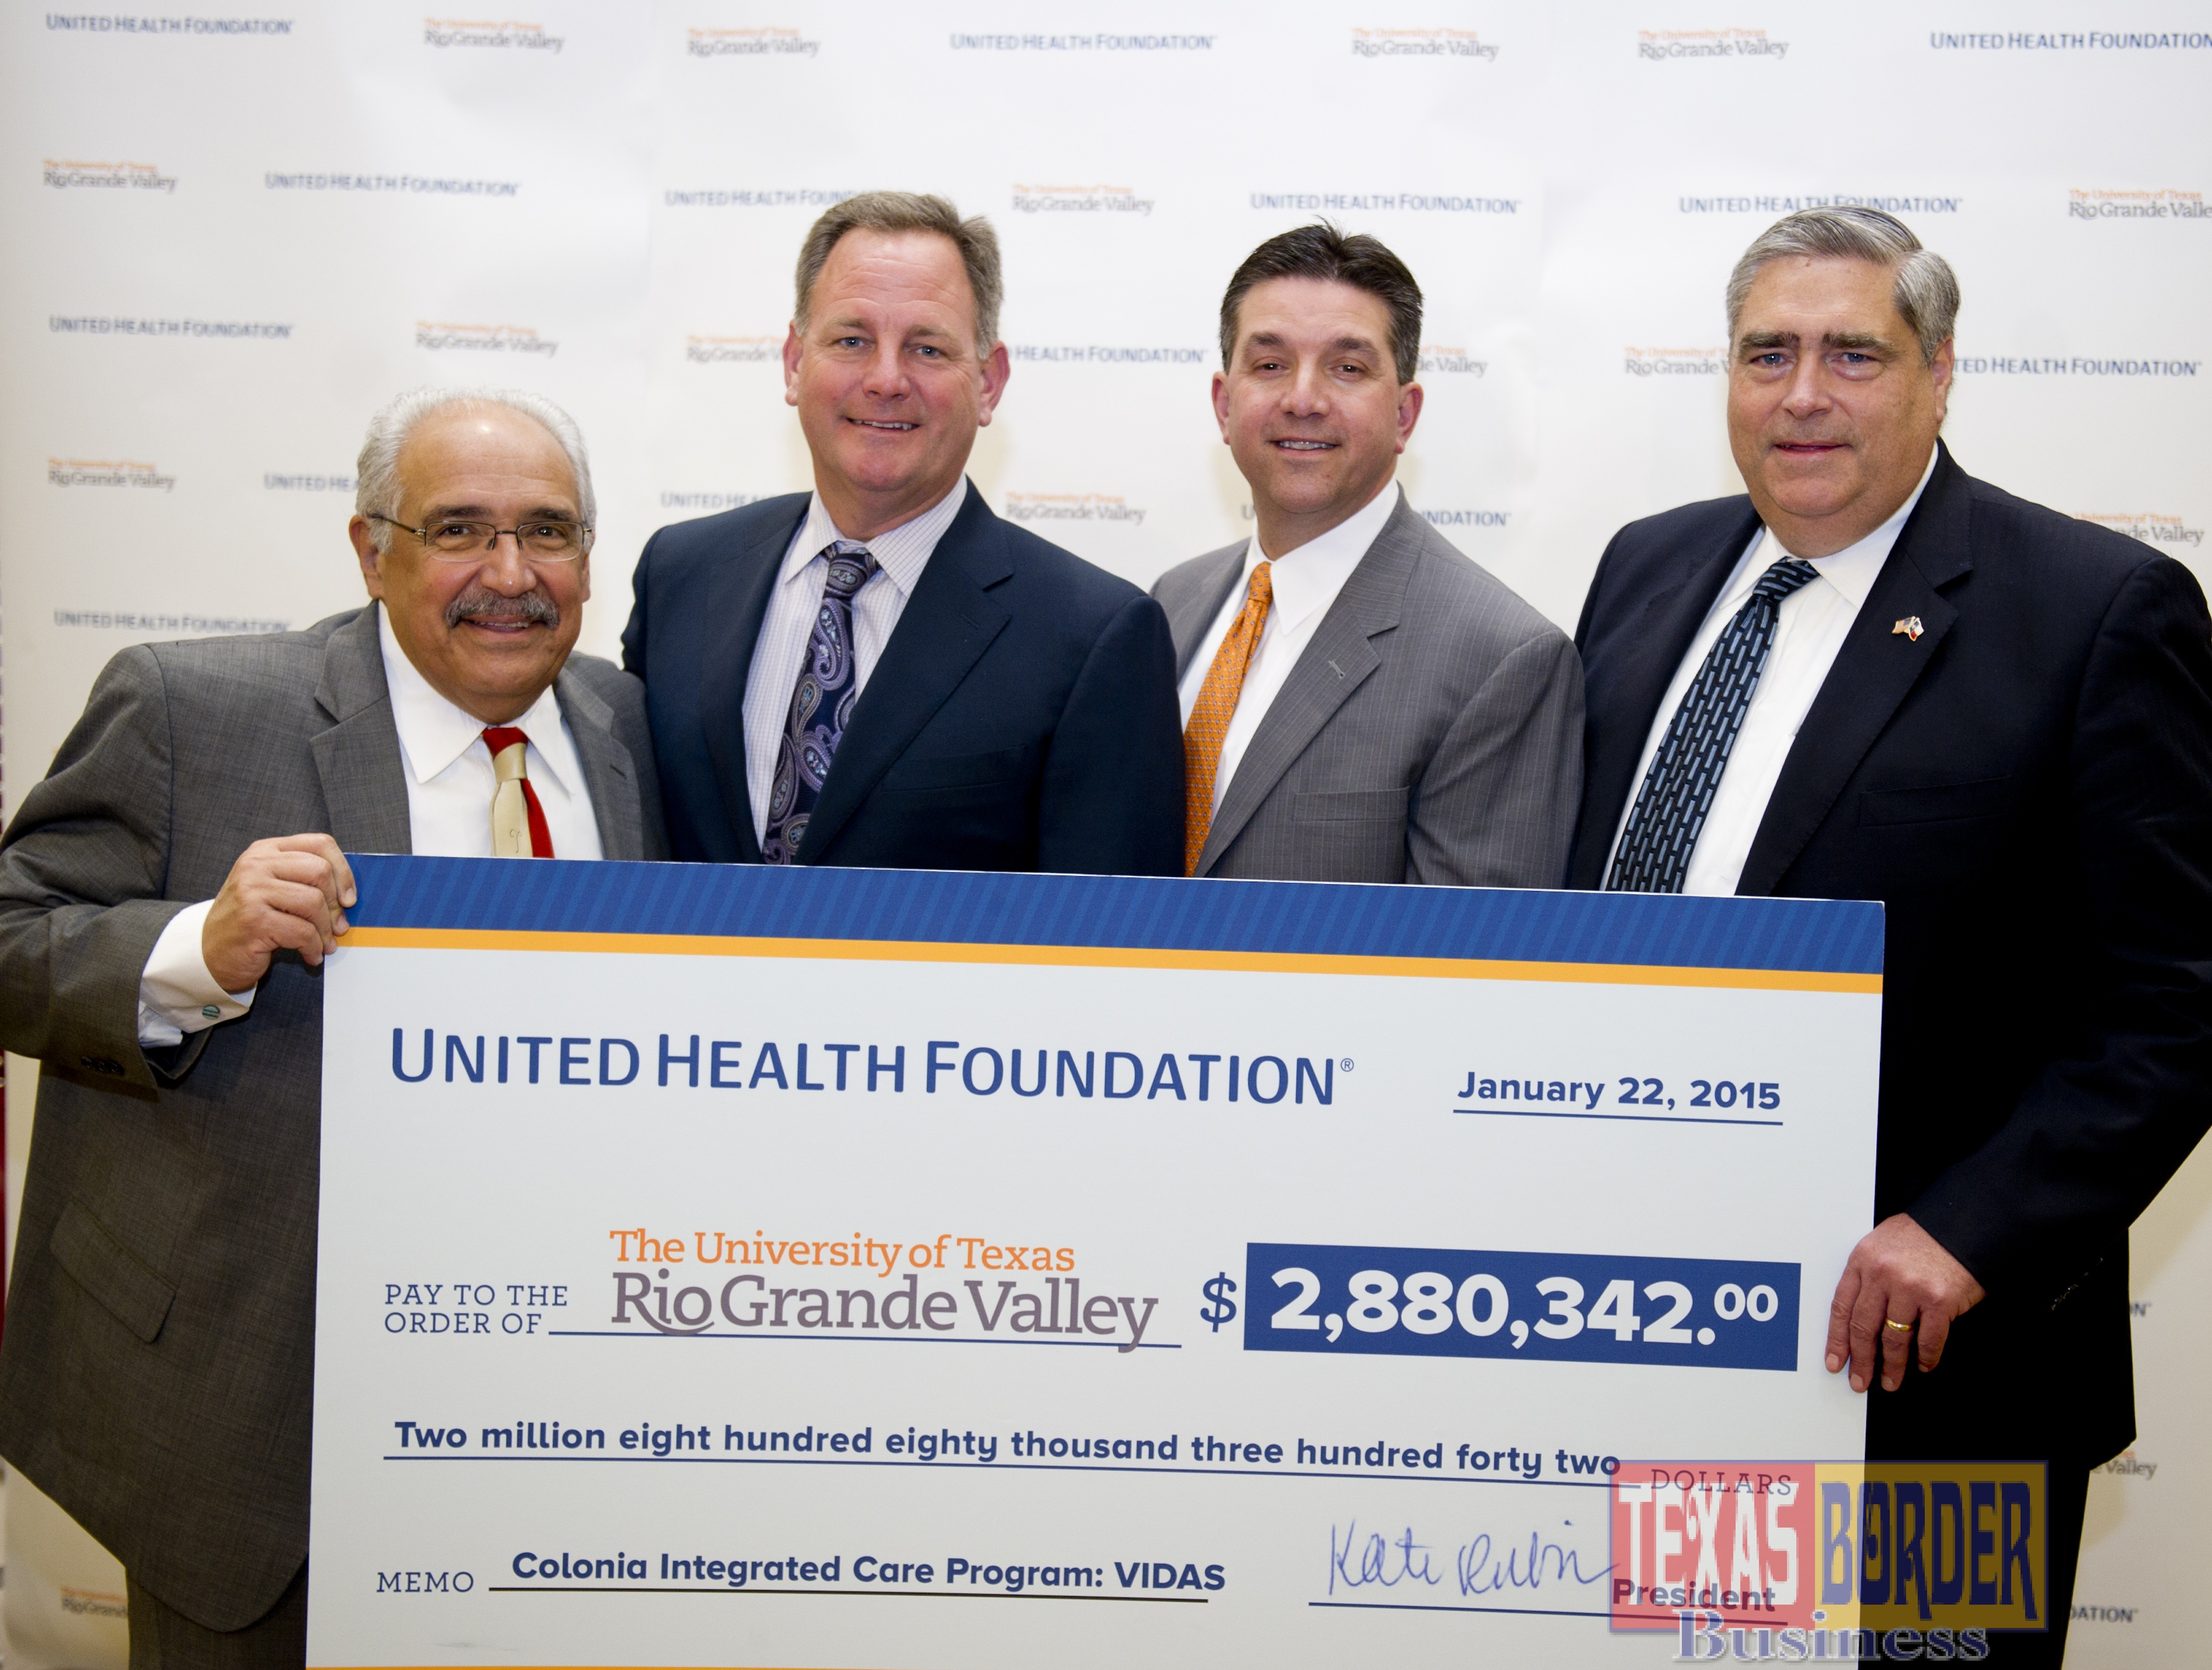 United Health Foundation Grants New Ut Rio Grande Valley School Of Medicine 2 Million To Help Build Healthier Communities In The Rio Grande Valley Texas Border Business